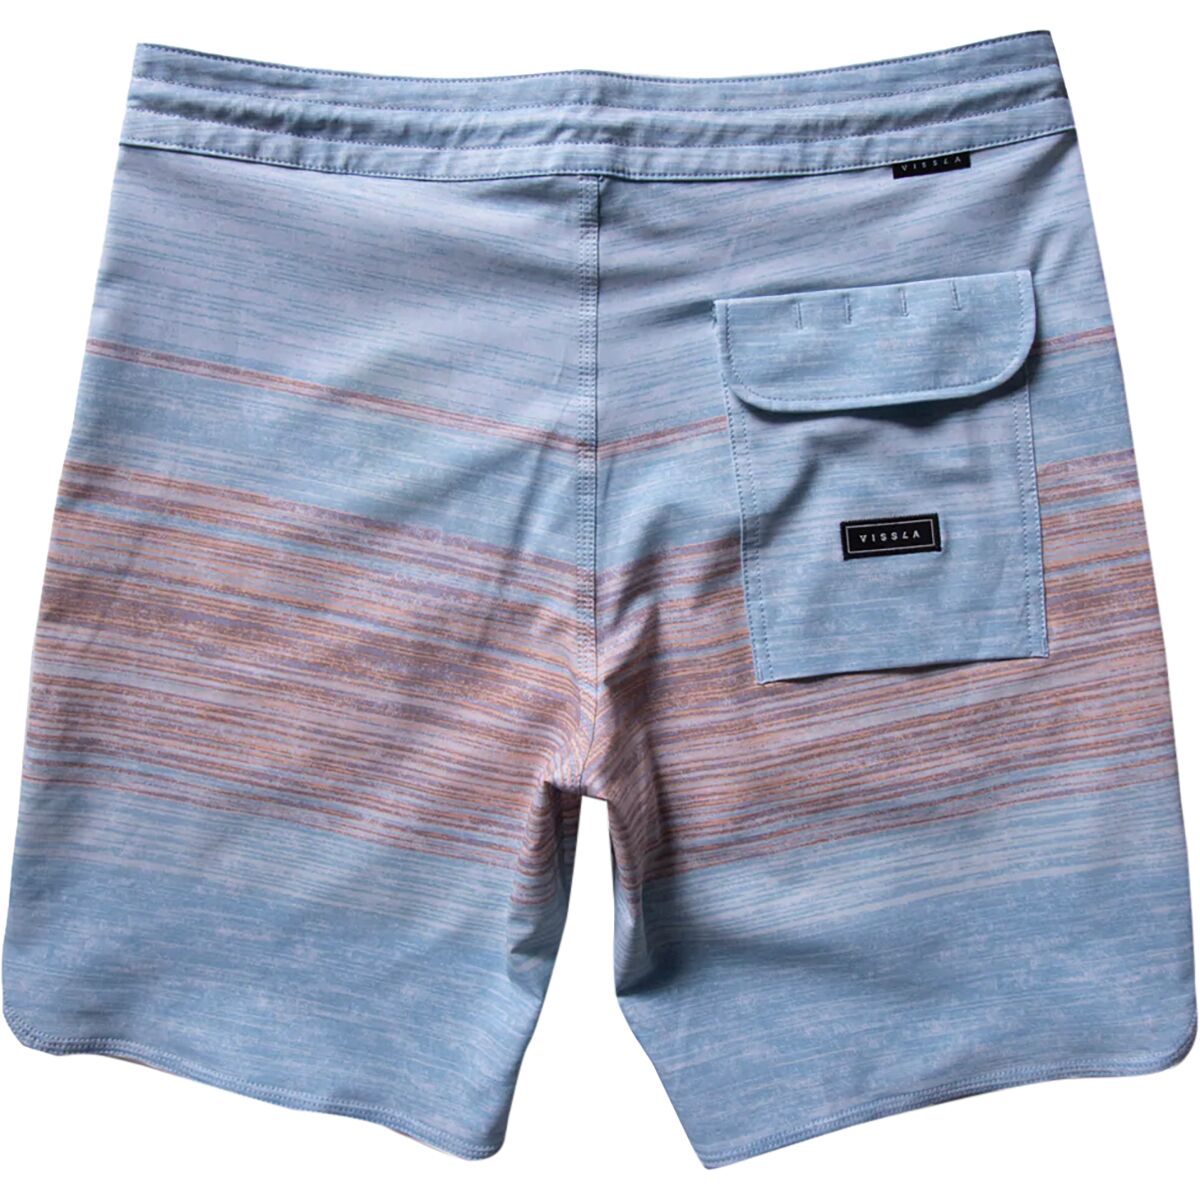 Vissla Blurry Horizons 18.5in Board Short - Men's - Clothing